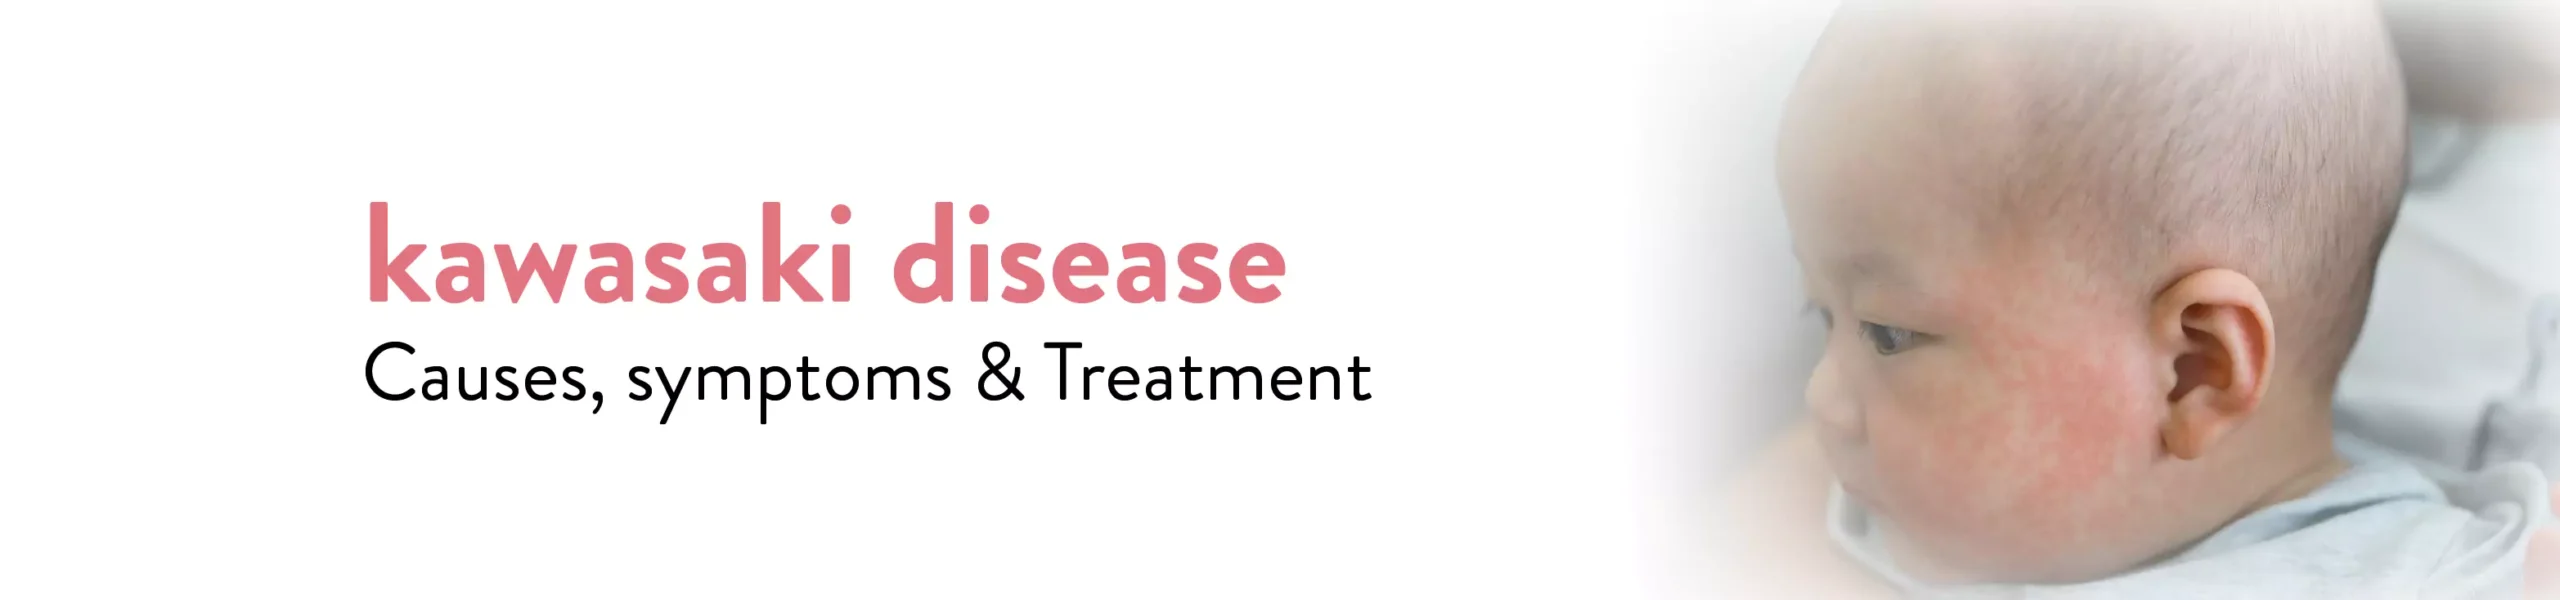 kawasaki-disease-causes-symptoms and treatment